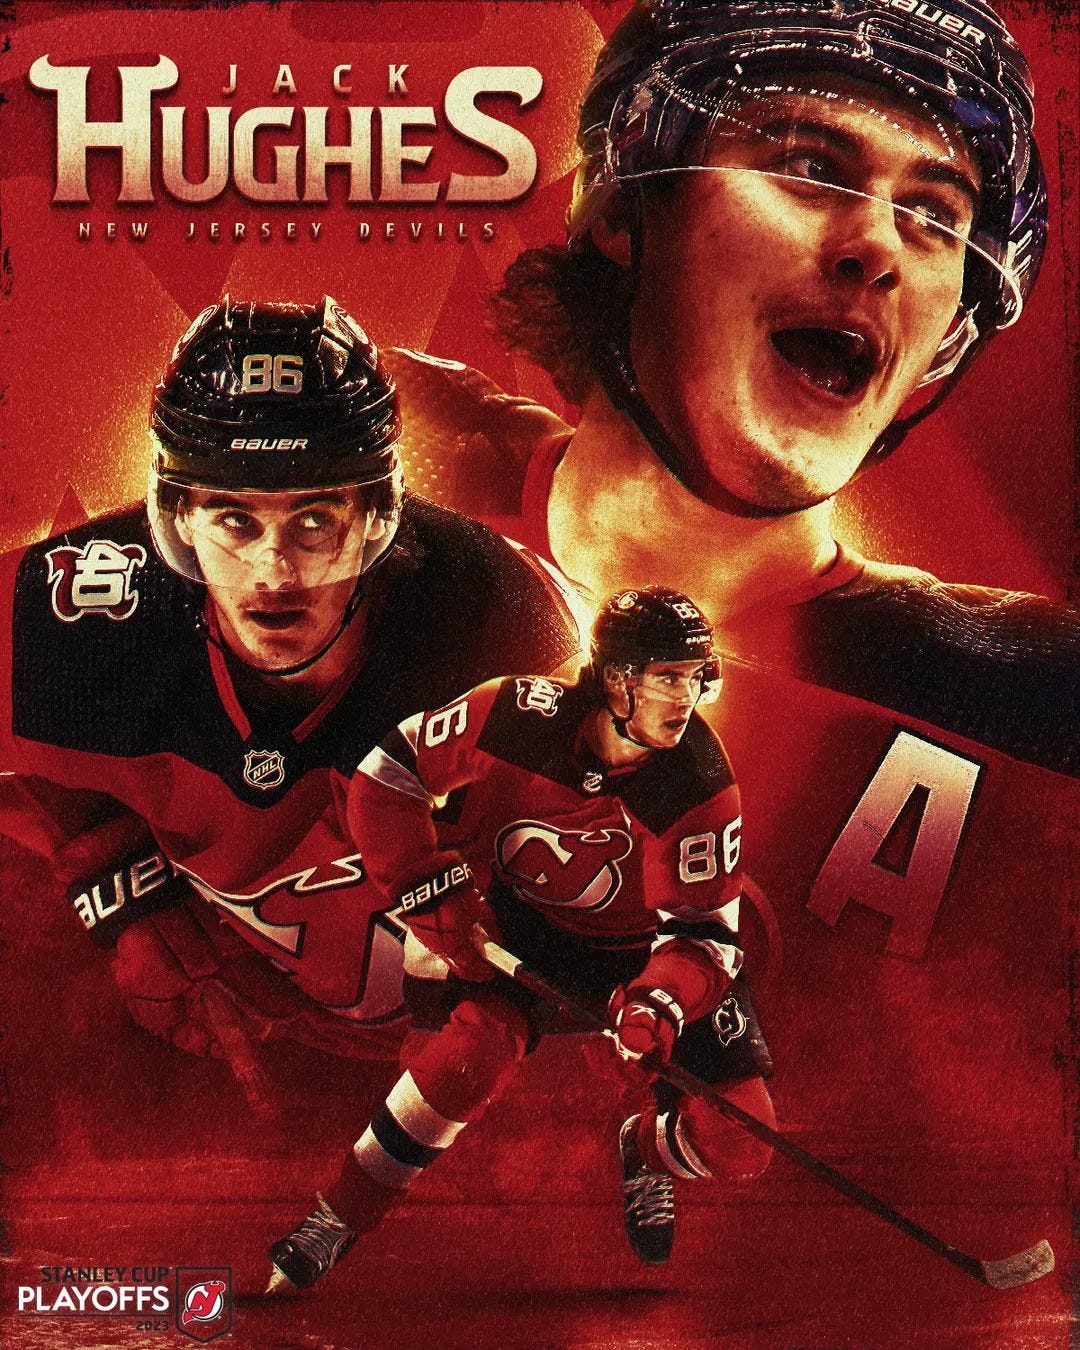 Devils' Jack Hughes scores 1st NHL goal in 1-0 win over Canucks - Sports  Illustrated